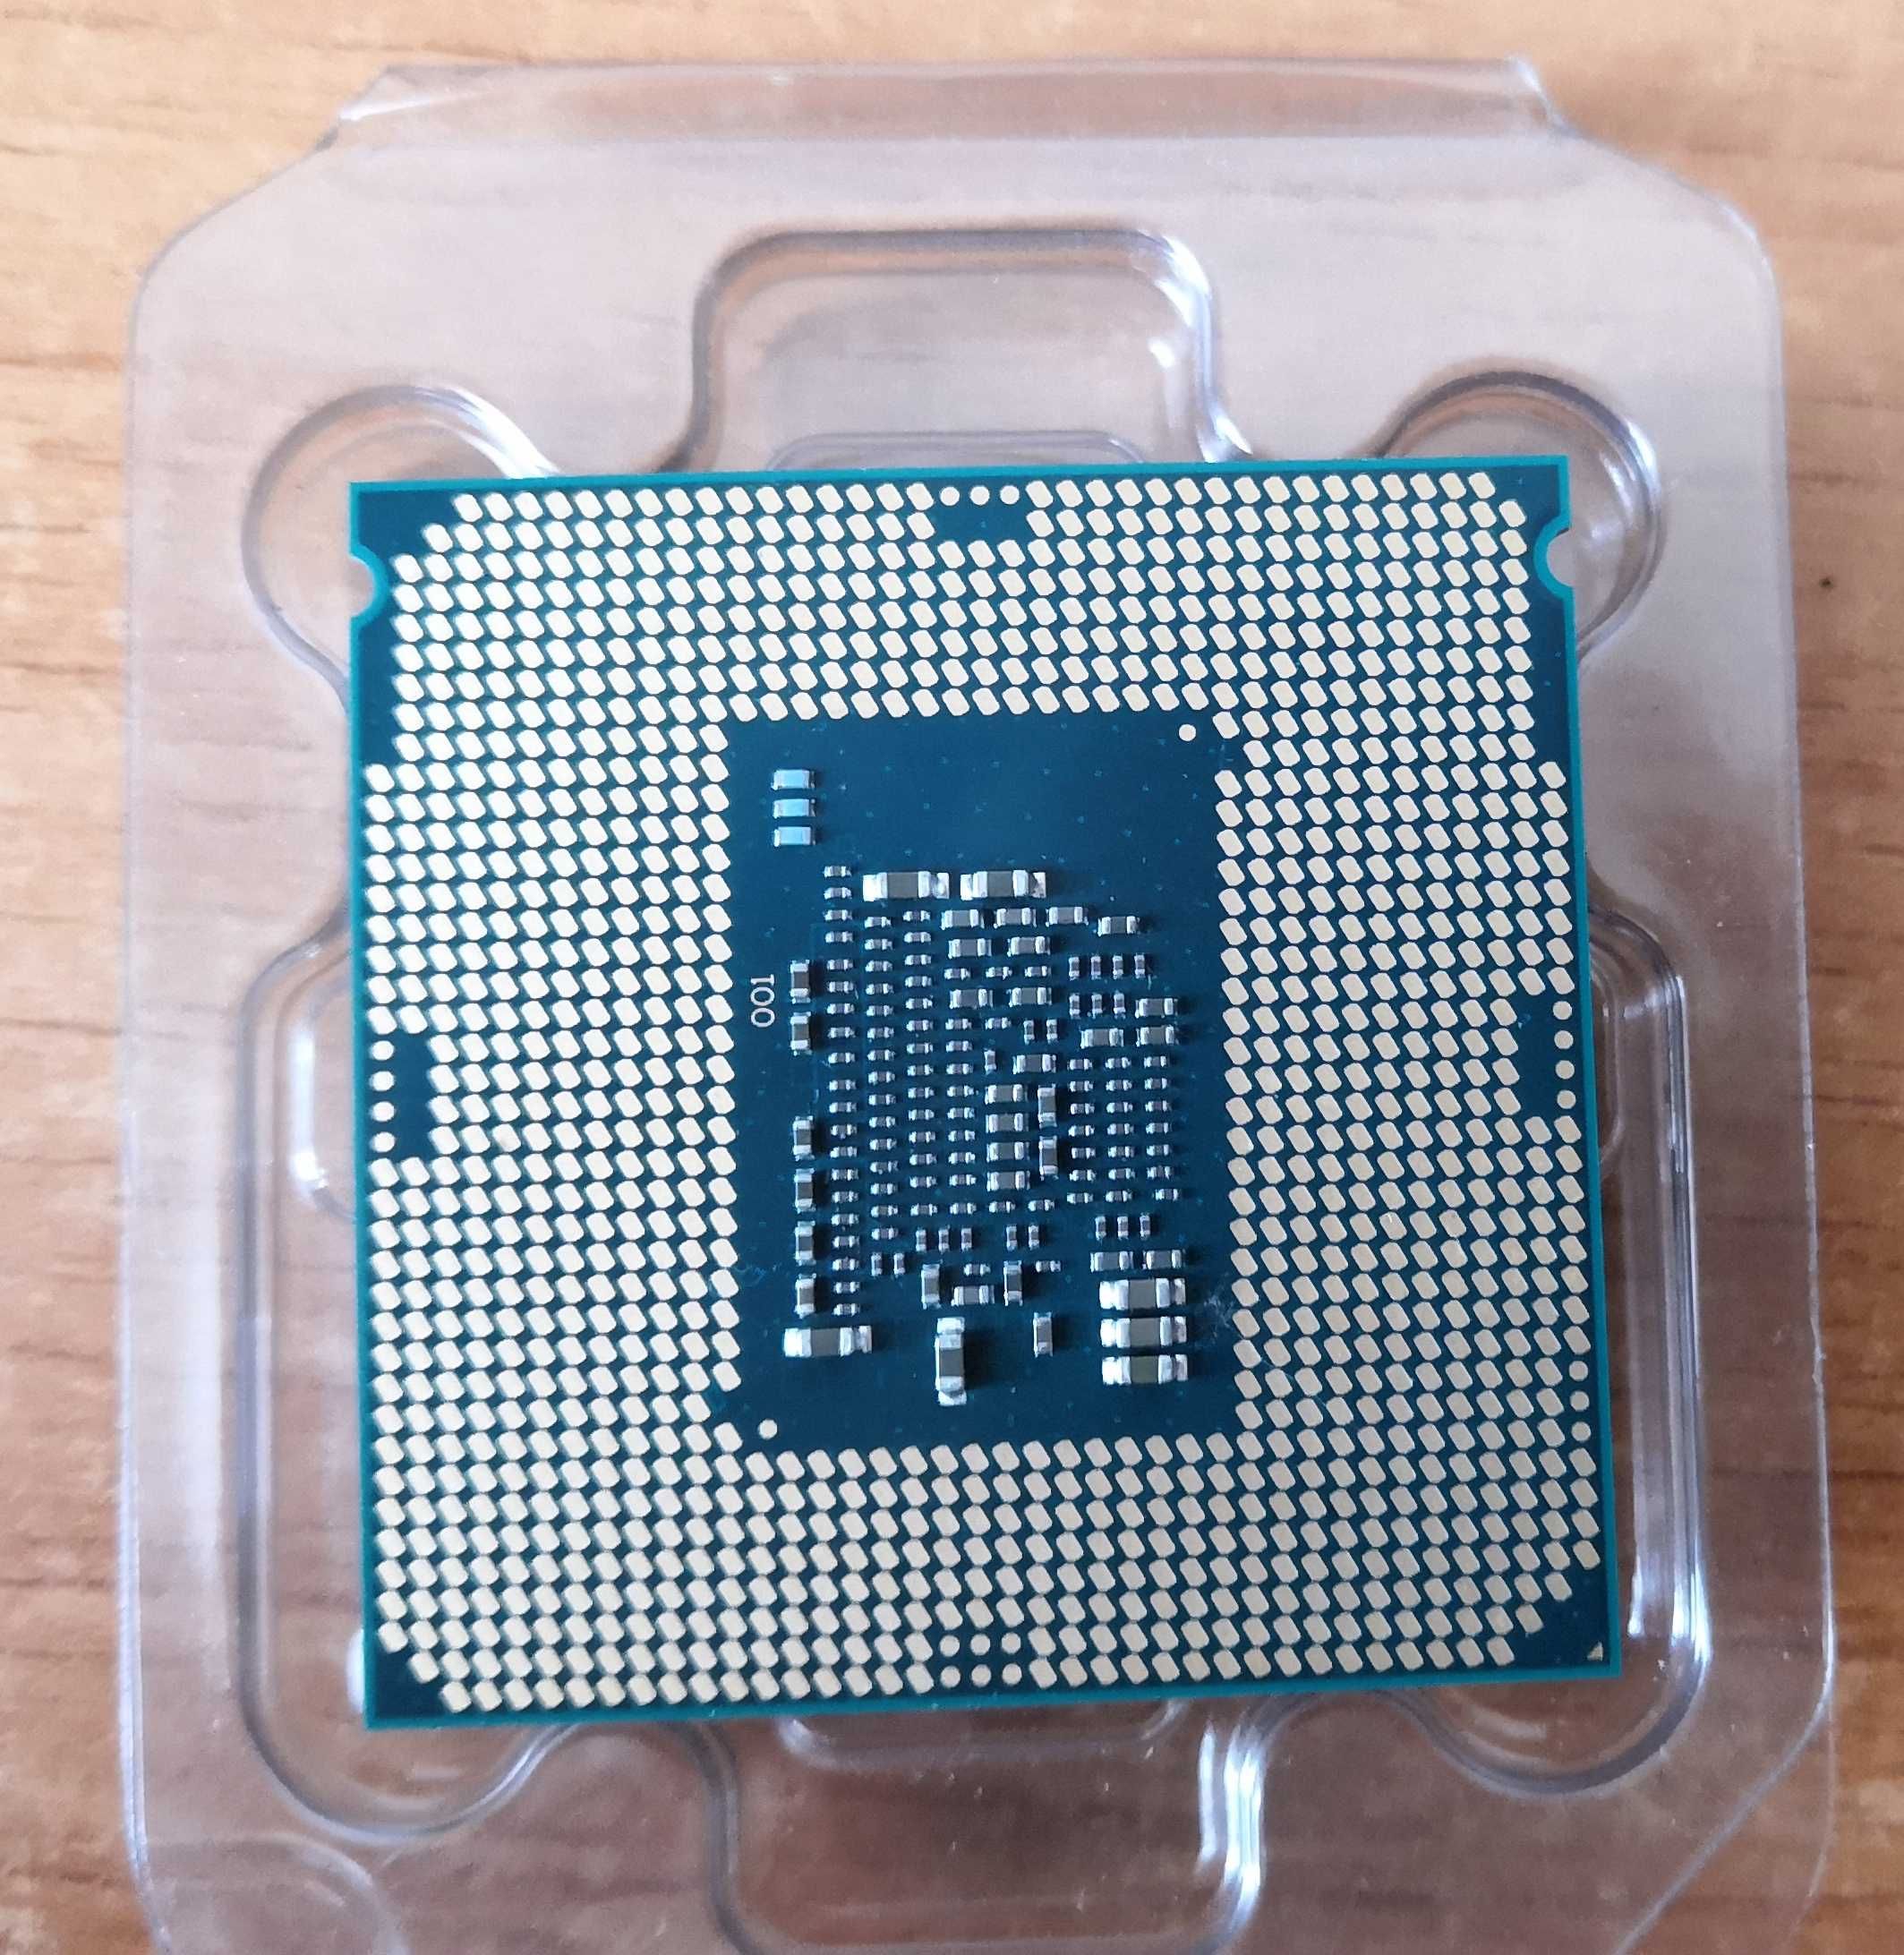 Procesor Intel® Celeron G3930 2.90GHz, 2MB, Socket 1151 + Cooler Stock